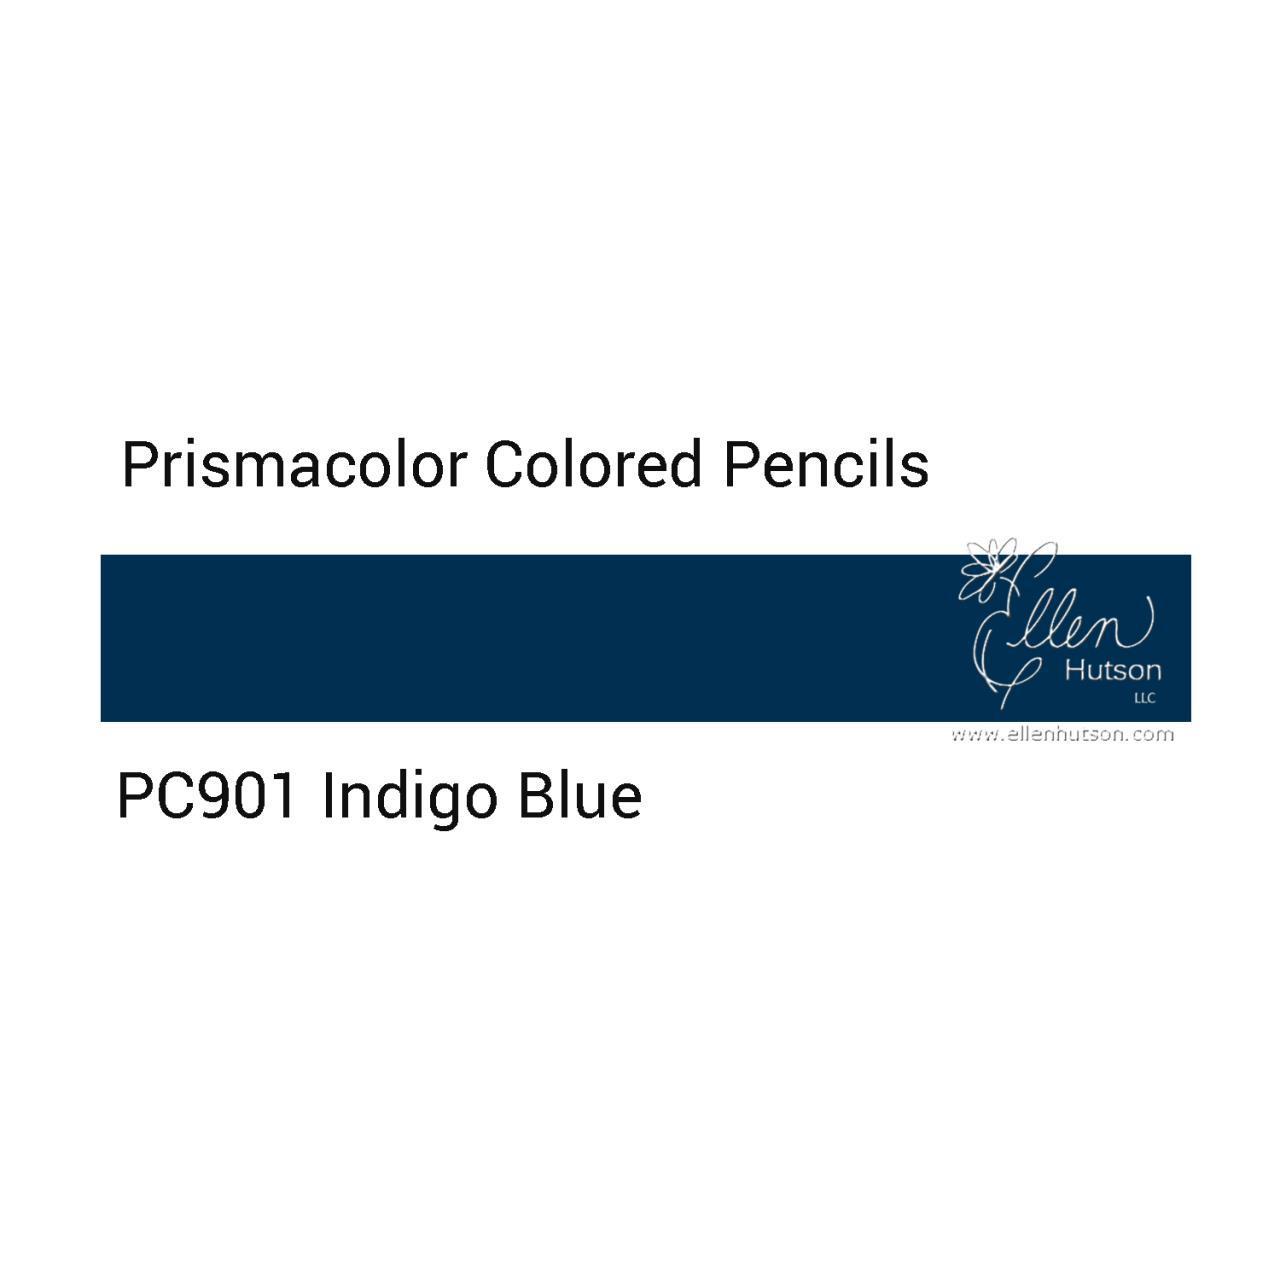 Prismacolor Logo - Indigo Blue PC901, Prismacolor Premier Colored Pencils